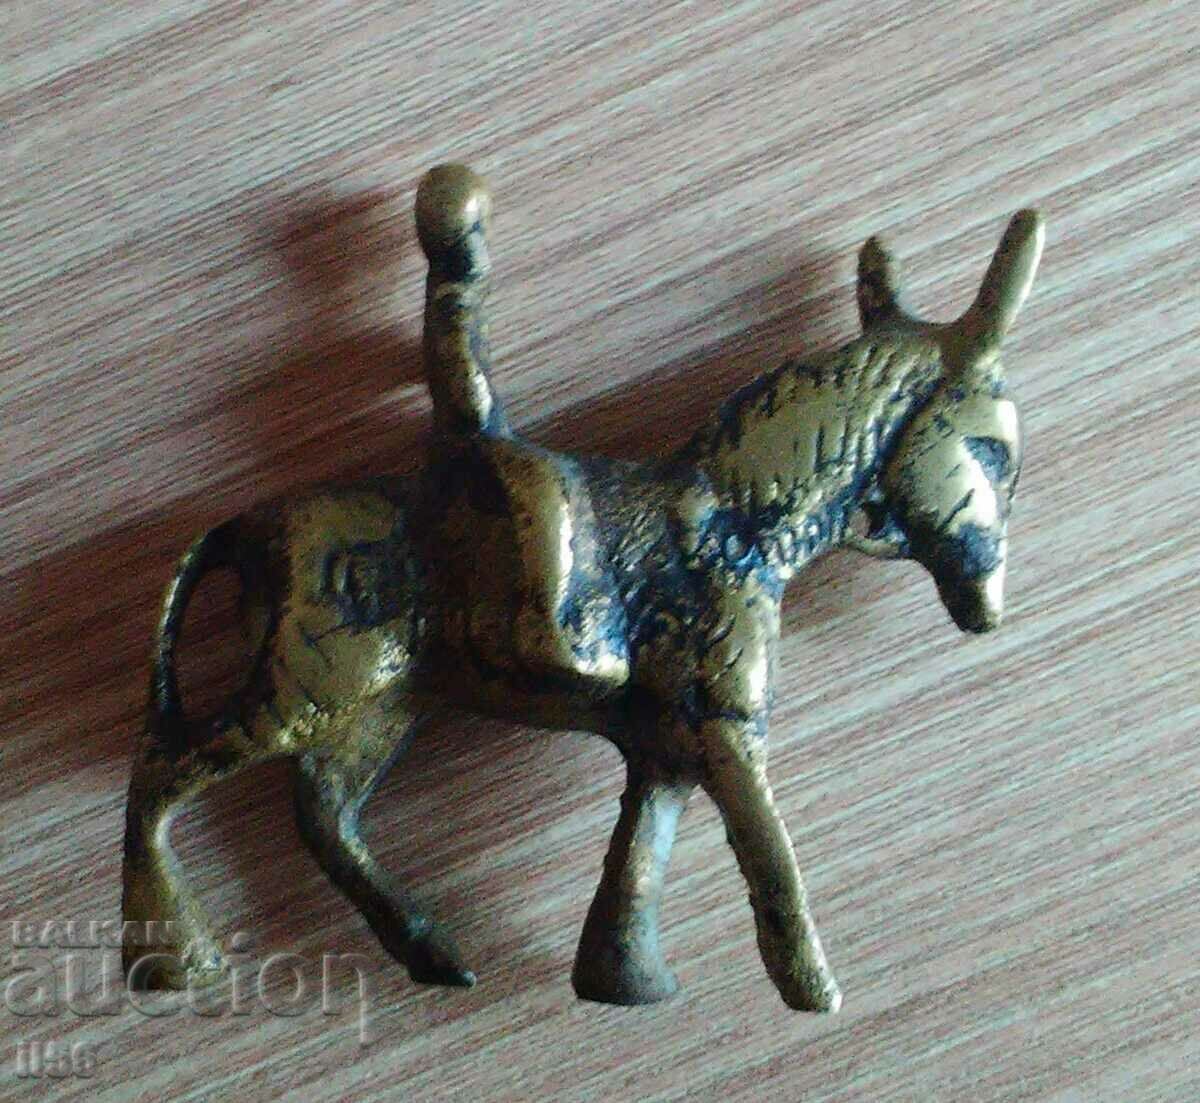 Old figure/sculpture/sculpture - donkey rider